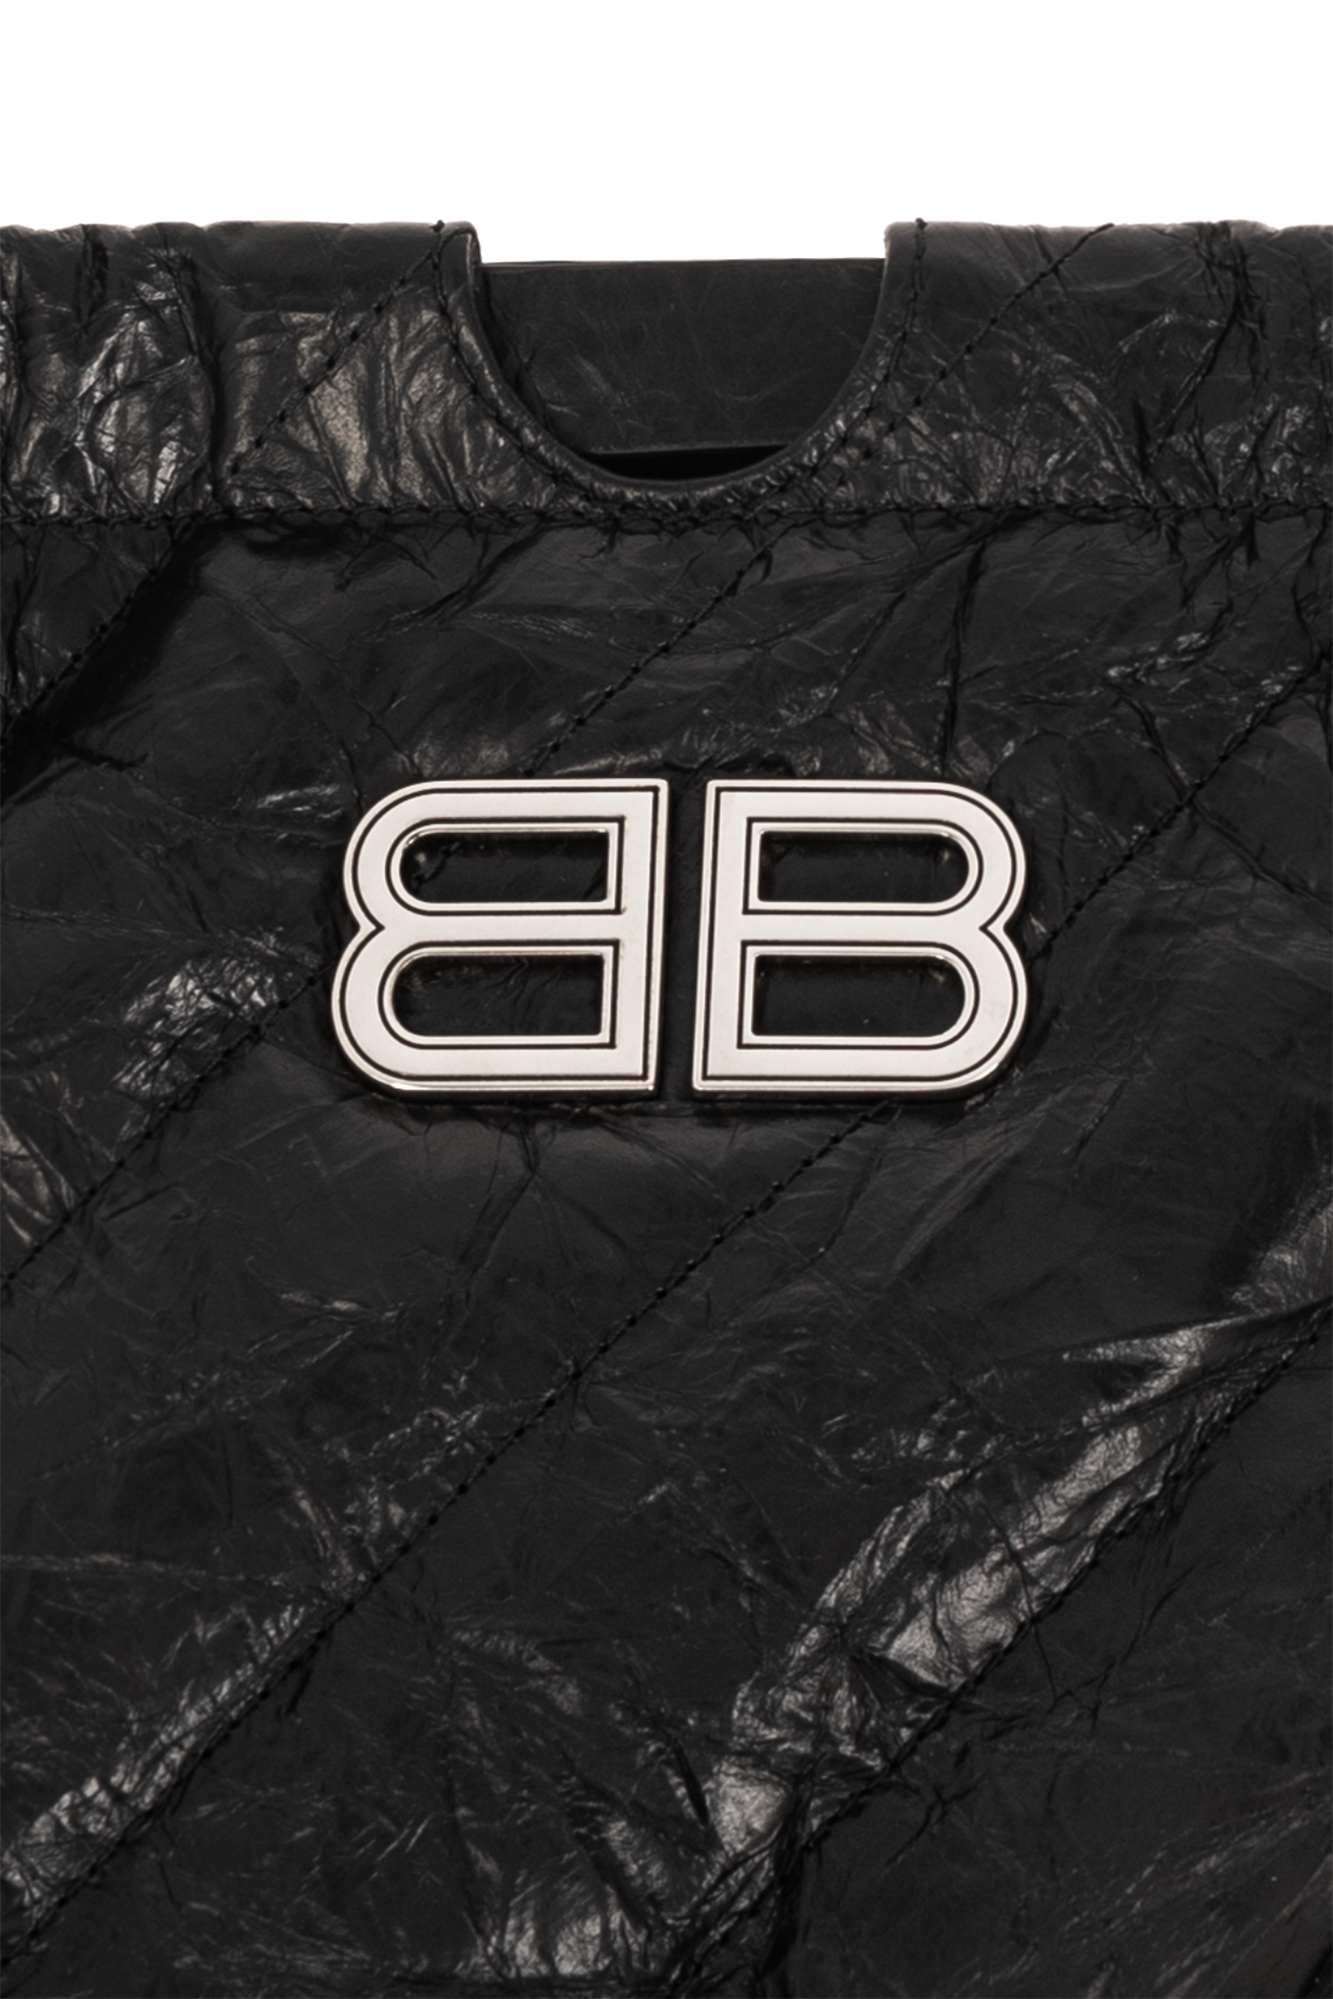 Balenciaga ‘Crush XS’ shoulder bag